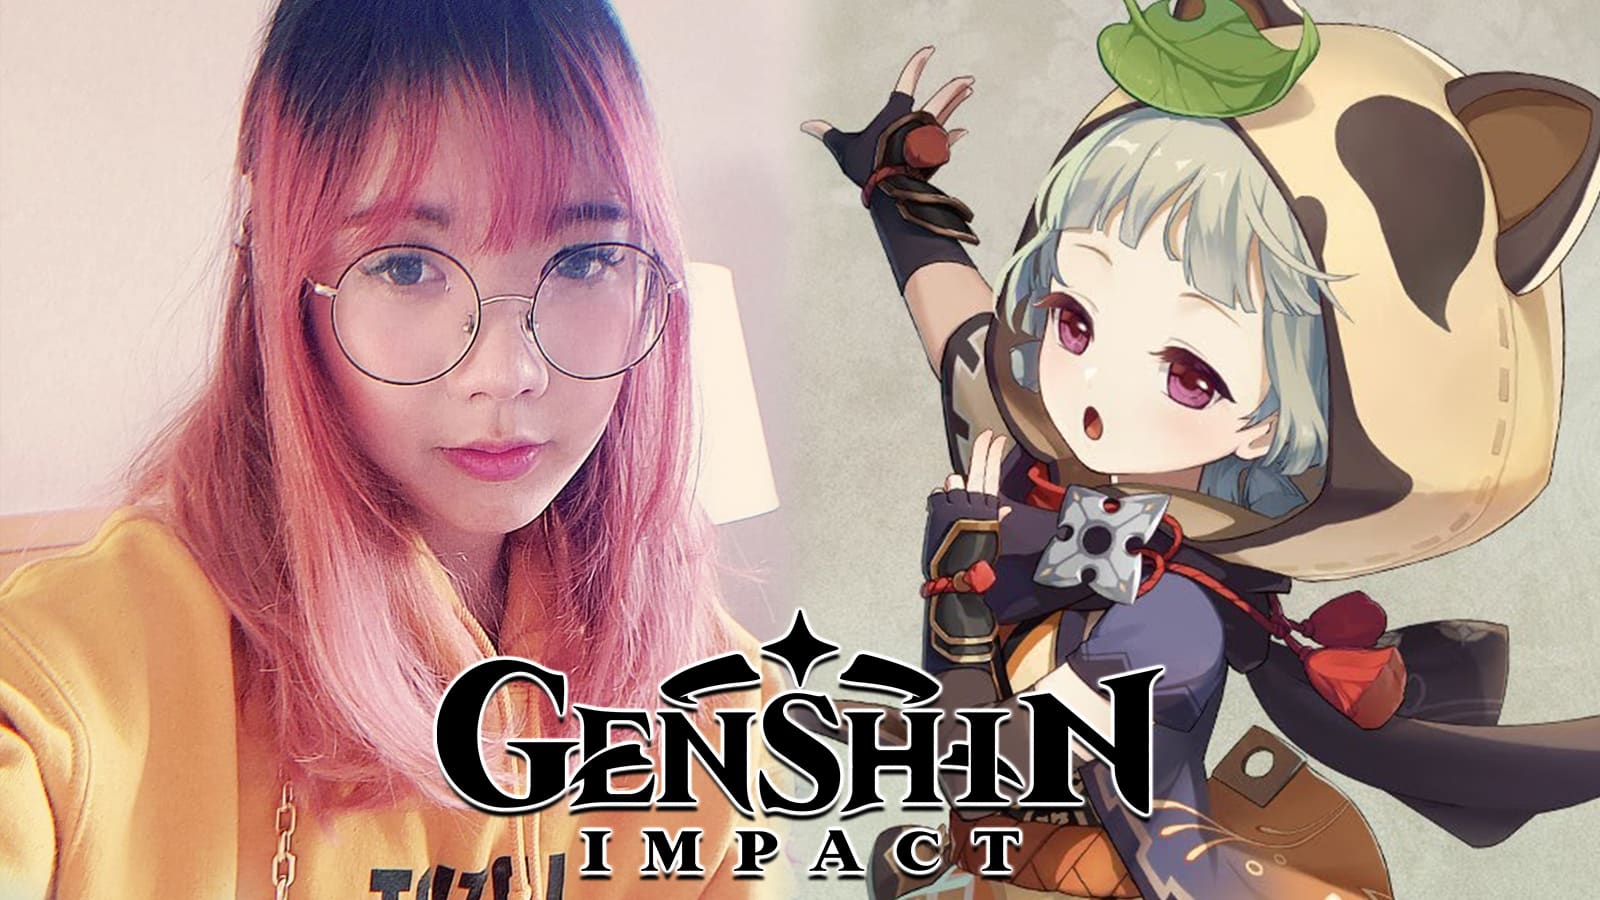 Twitch streamer LilyPichu next to Genshin Impact character Sayu